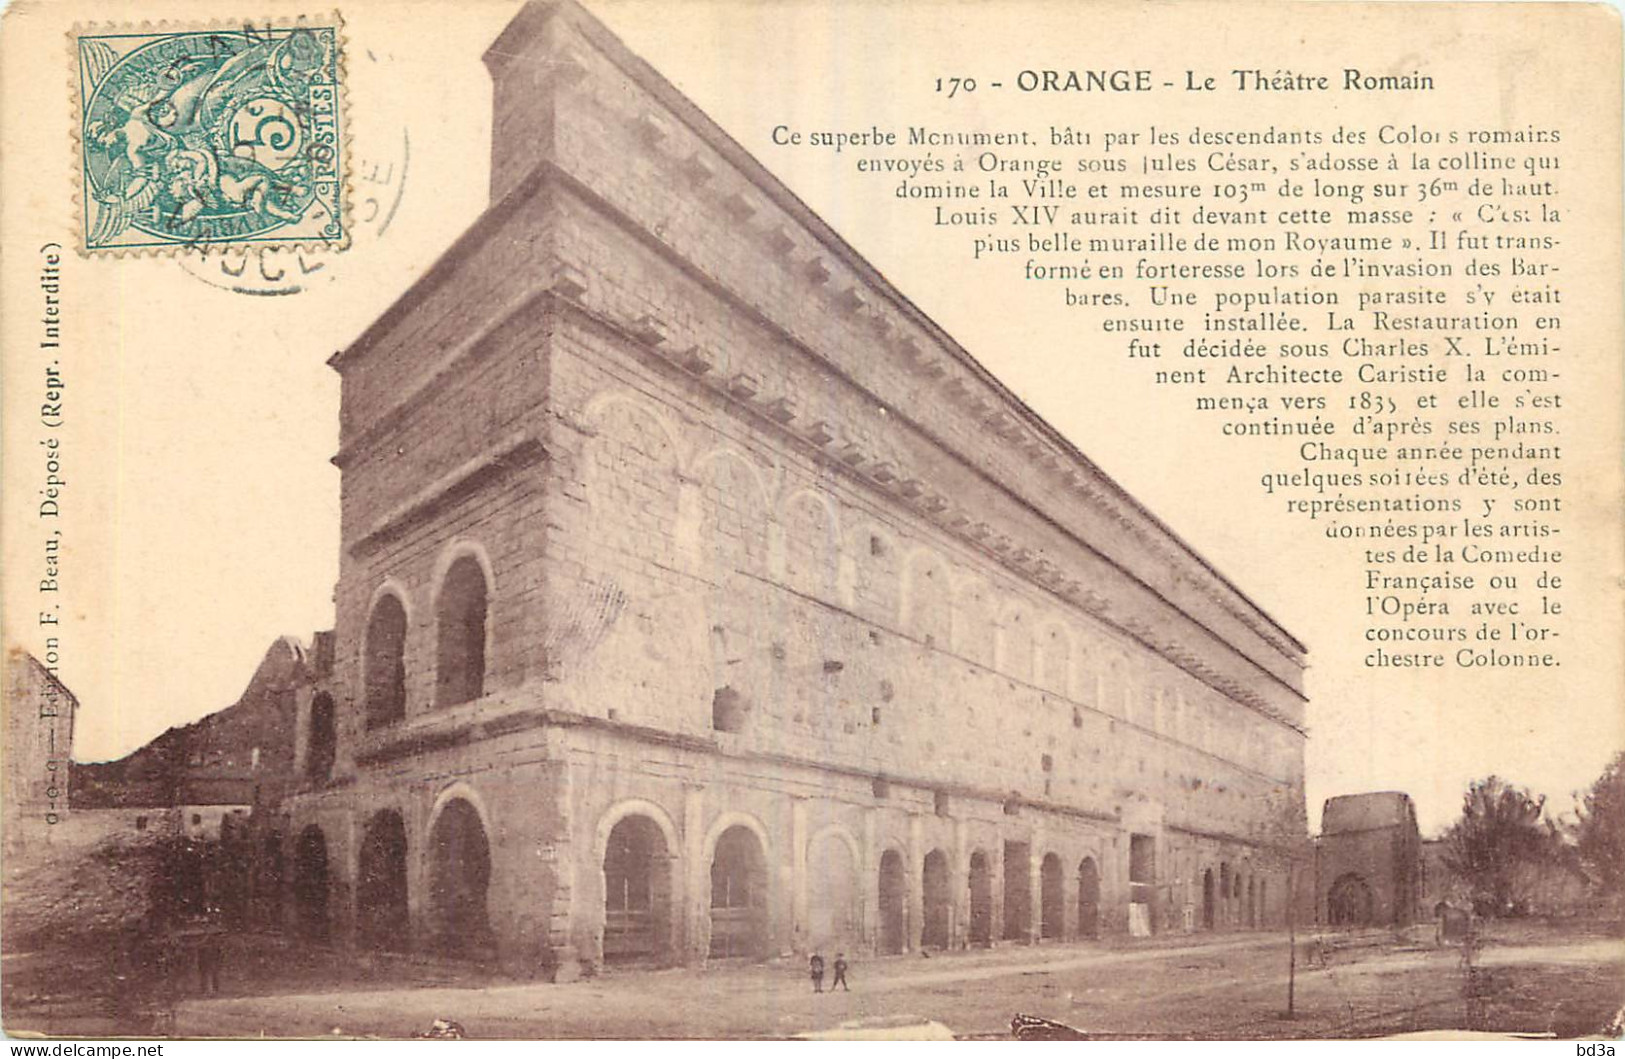 84 - ORANGE - LE THEATRE ROMAIN -Edition F. Beau - 170 - Orange